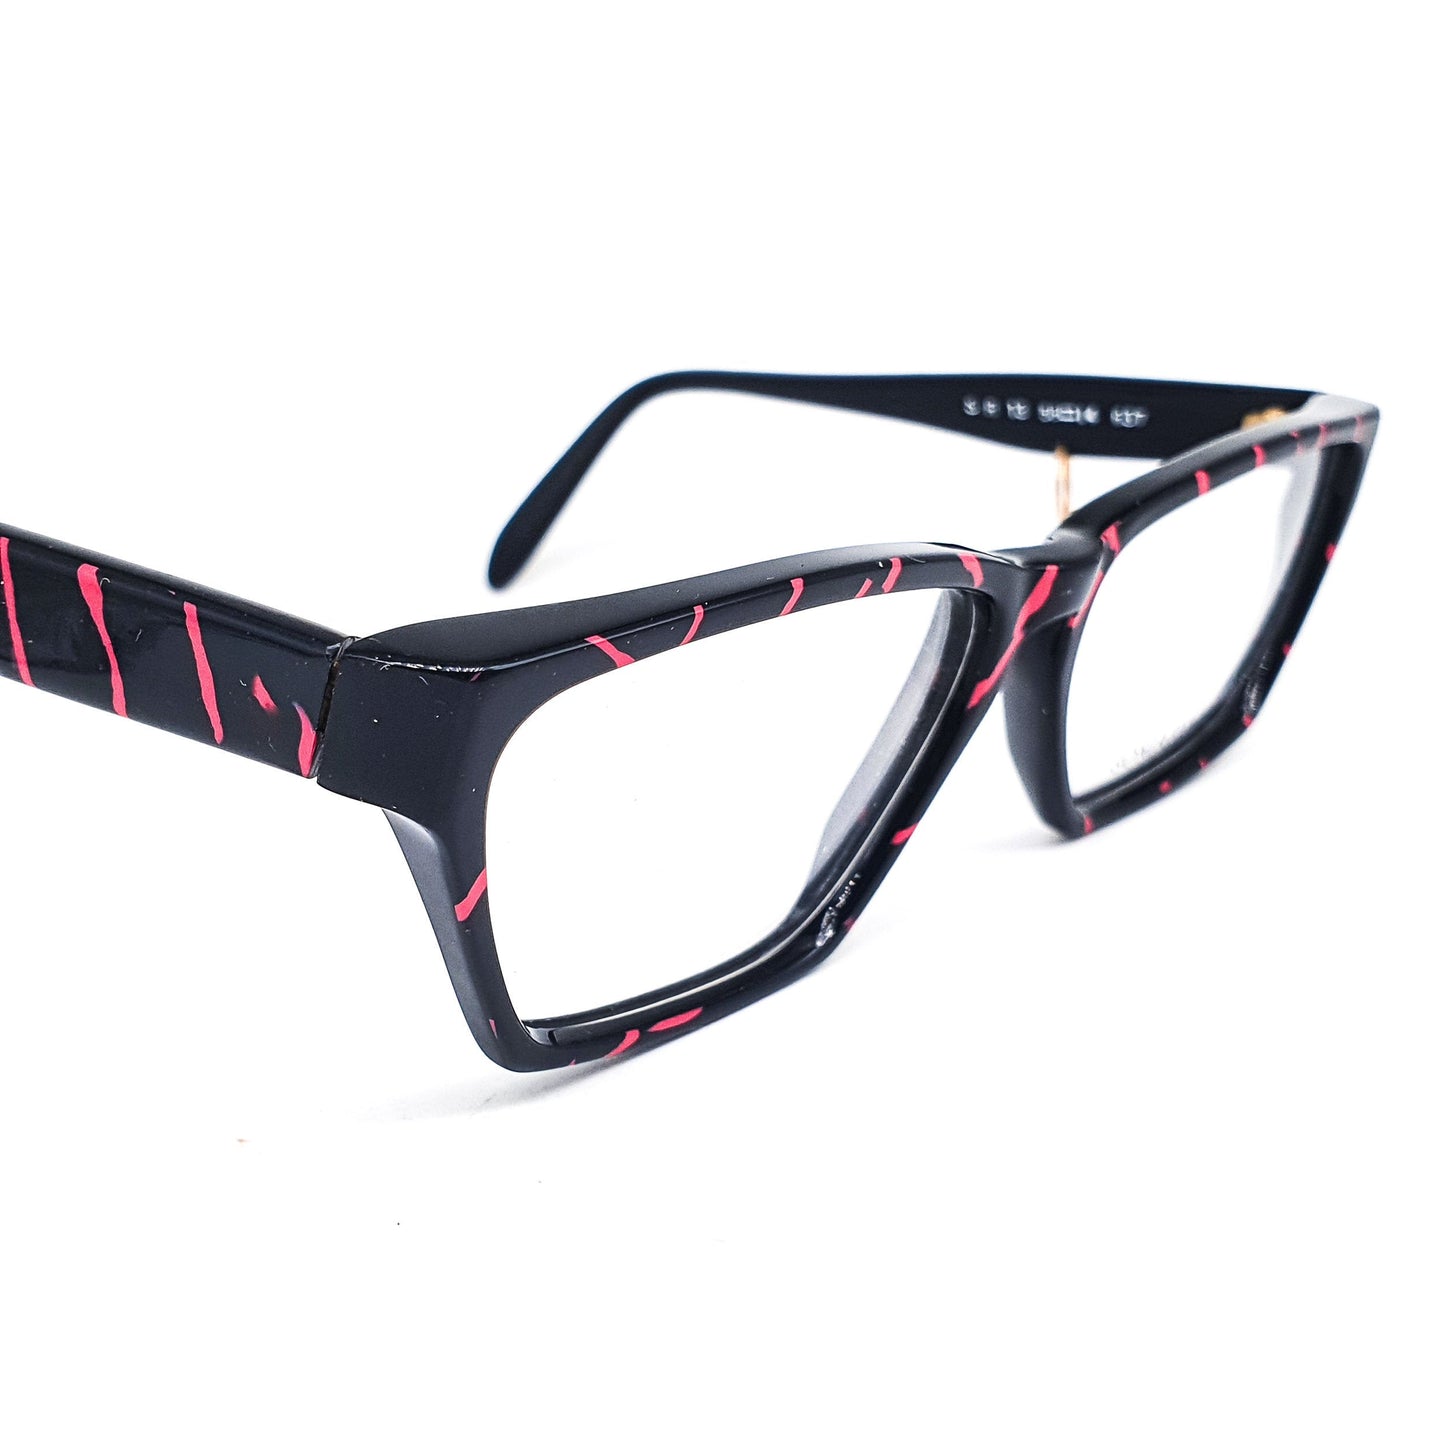 Sonia Rykiel SR13 square eyeglasses frames with cool pierced temple detail in pink/black zebra, NoS 80s France